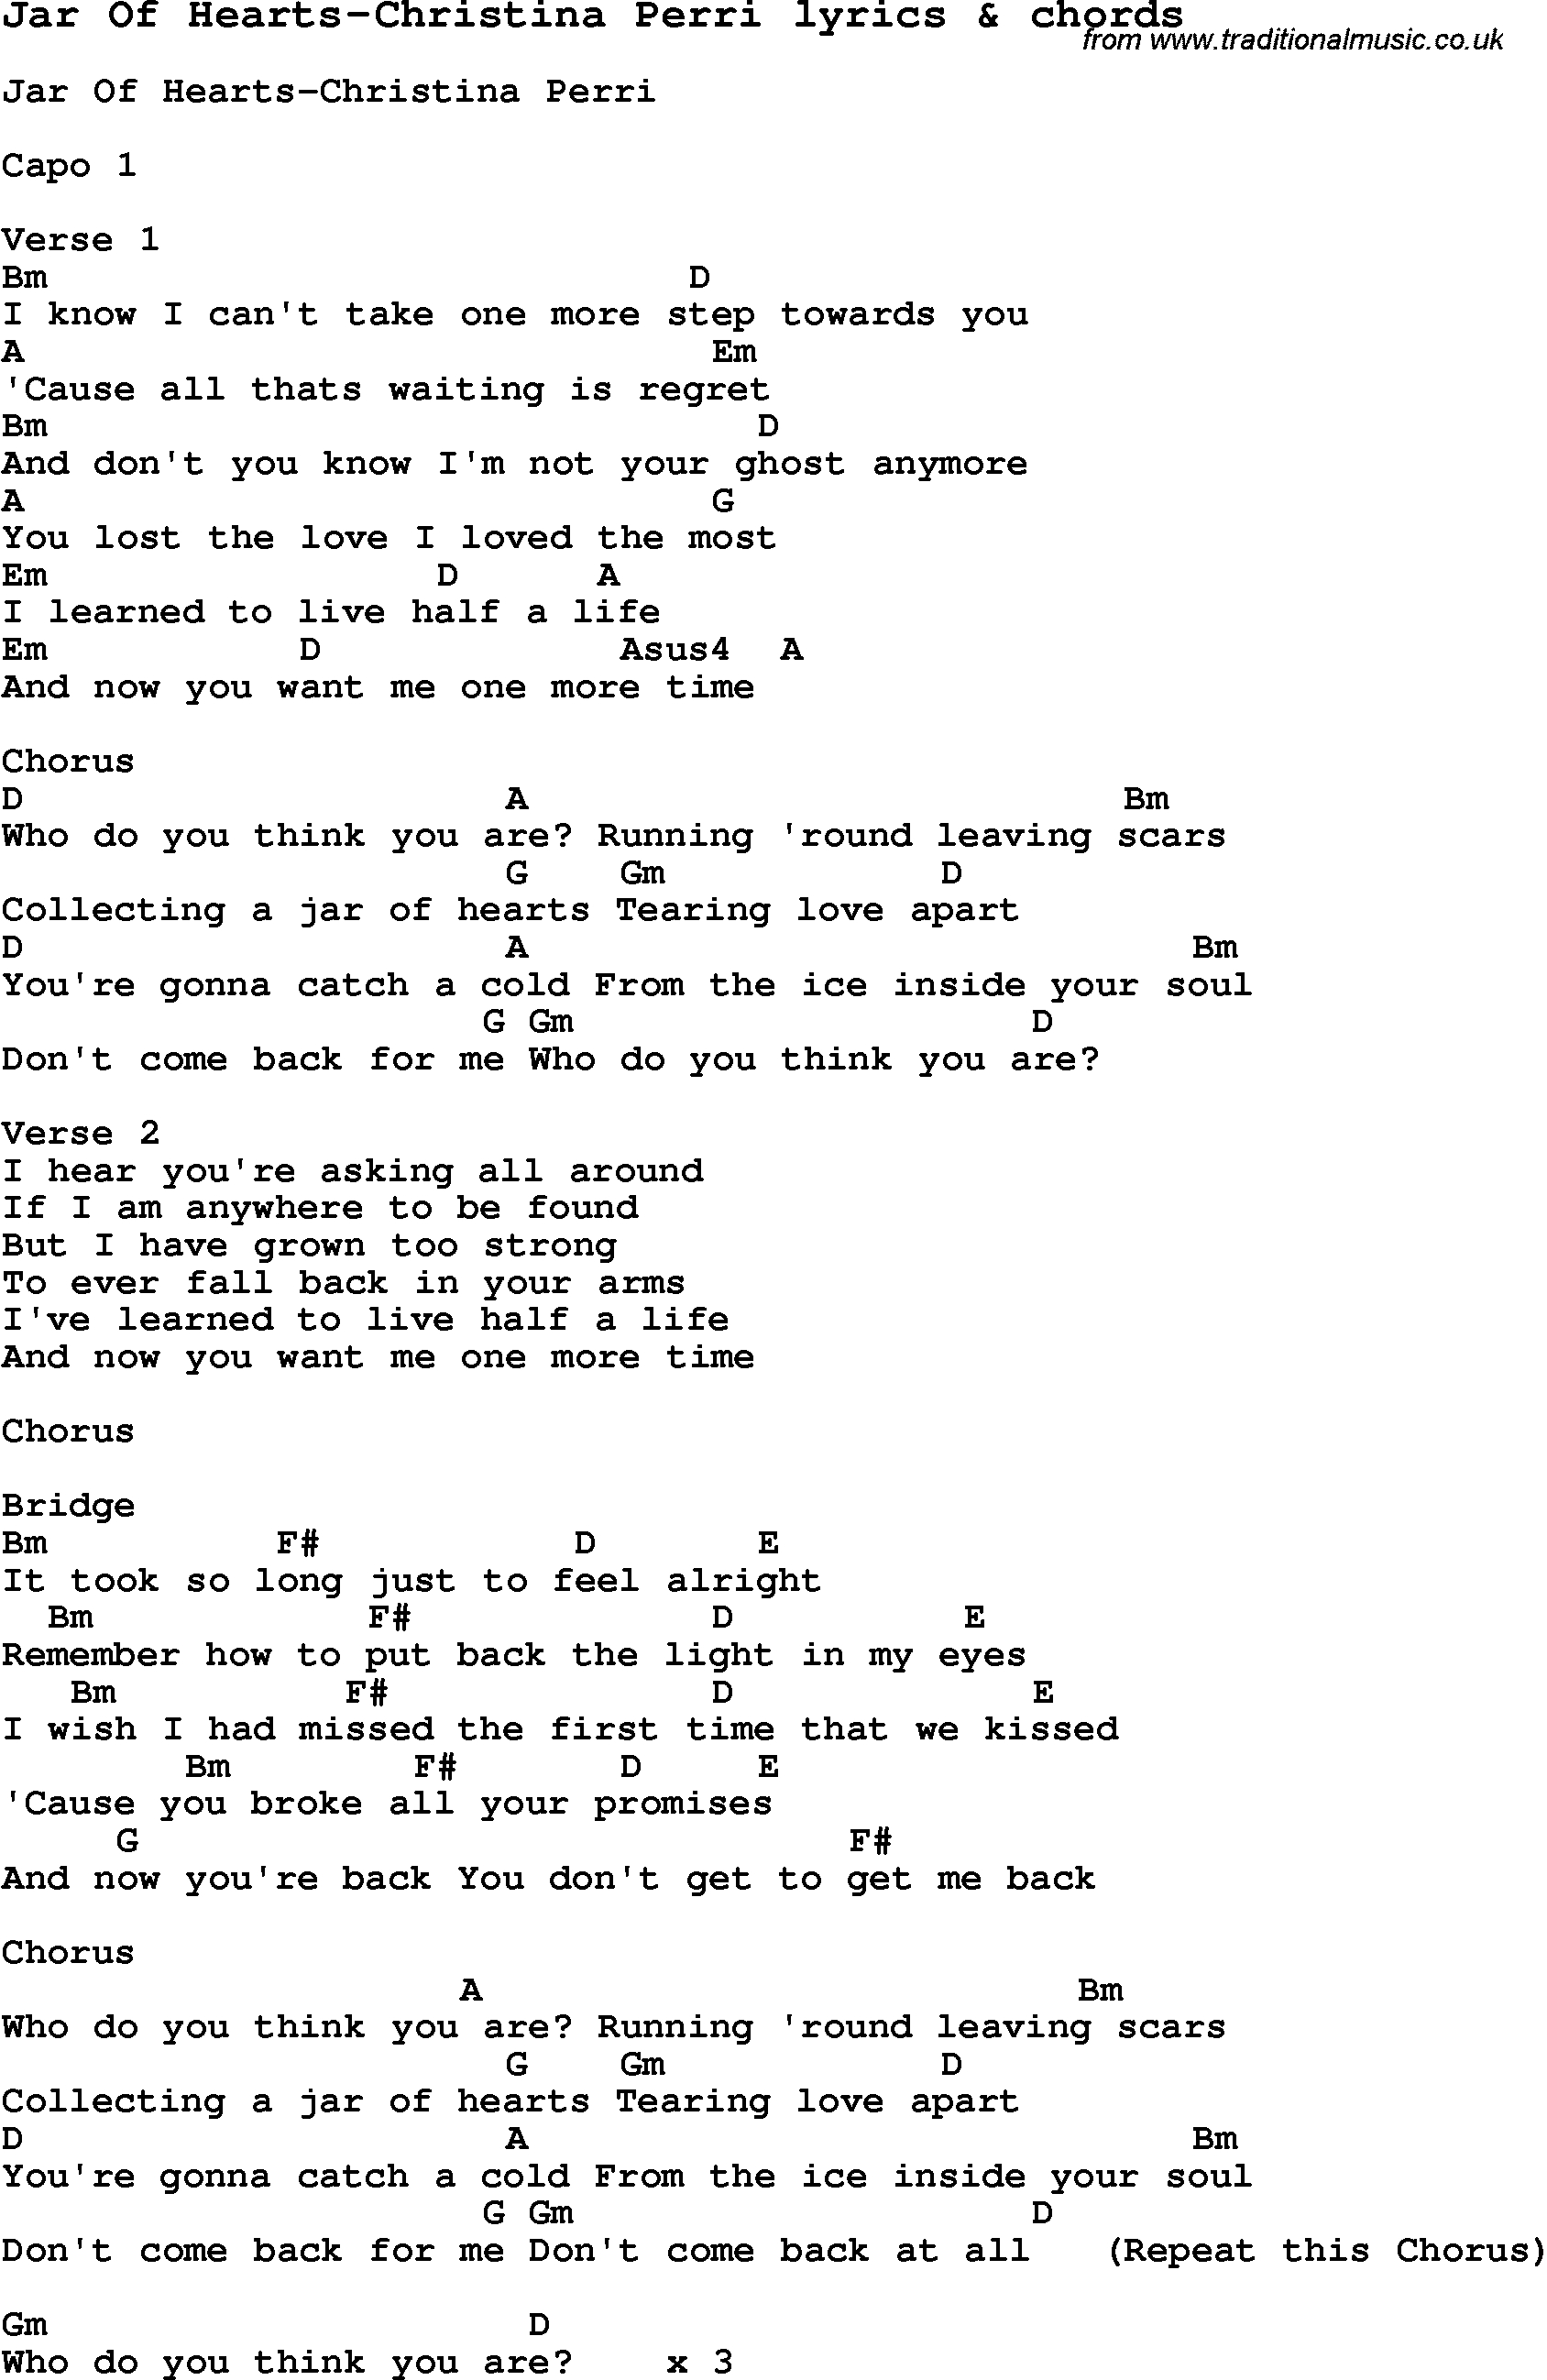 Jar Of Hearts Chords Love Song Lyrics Forjar Of Hearts Christina Perri With Chords